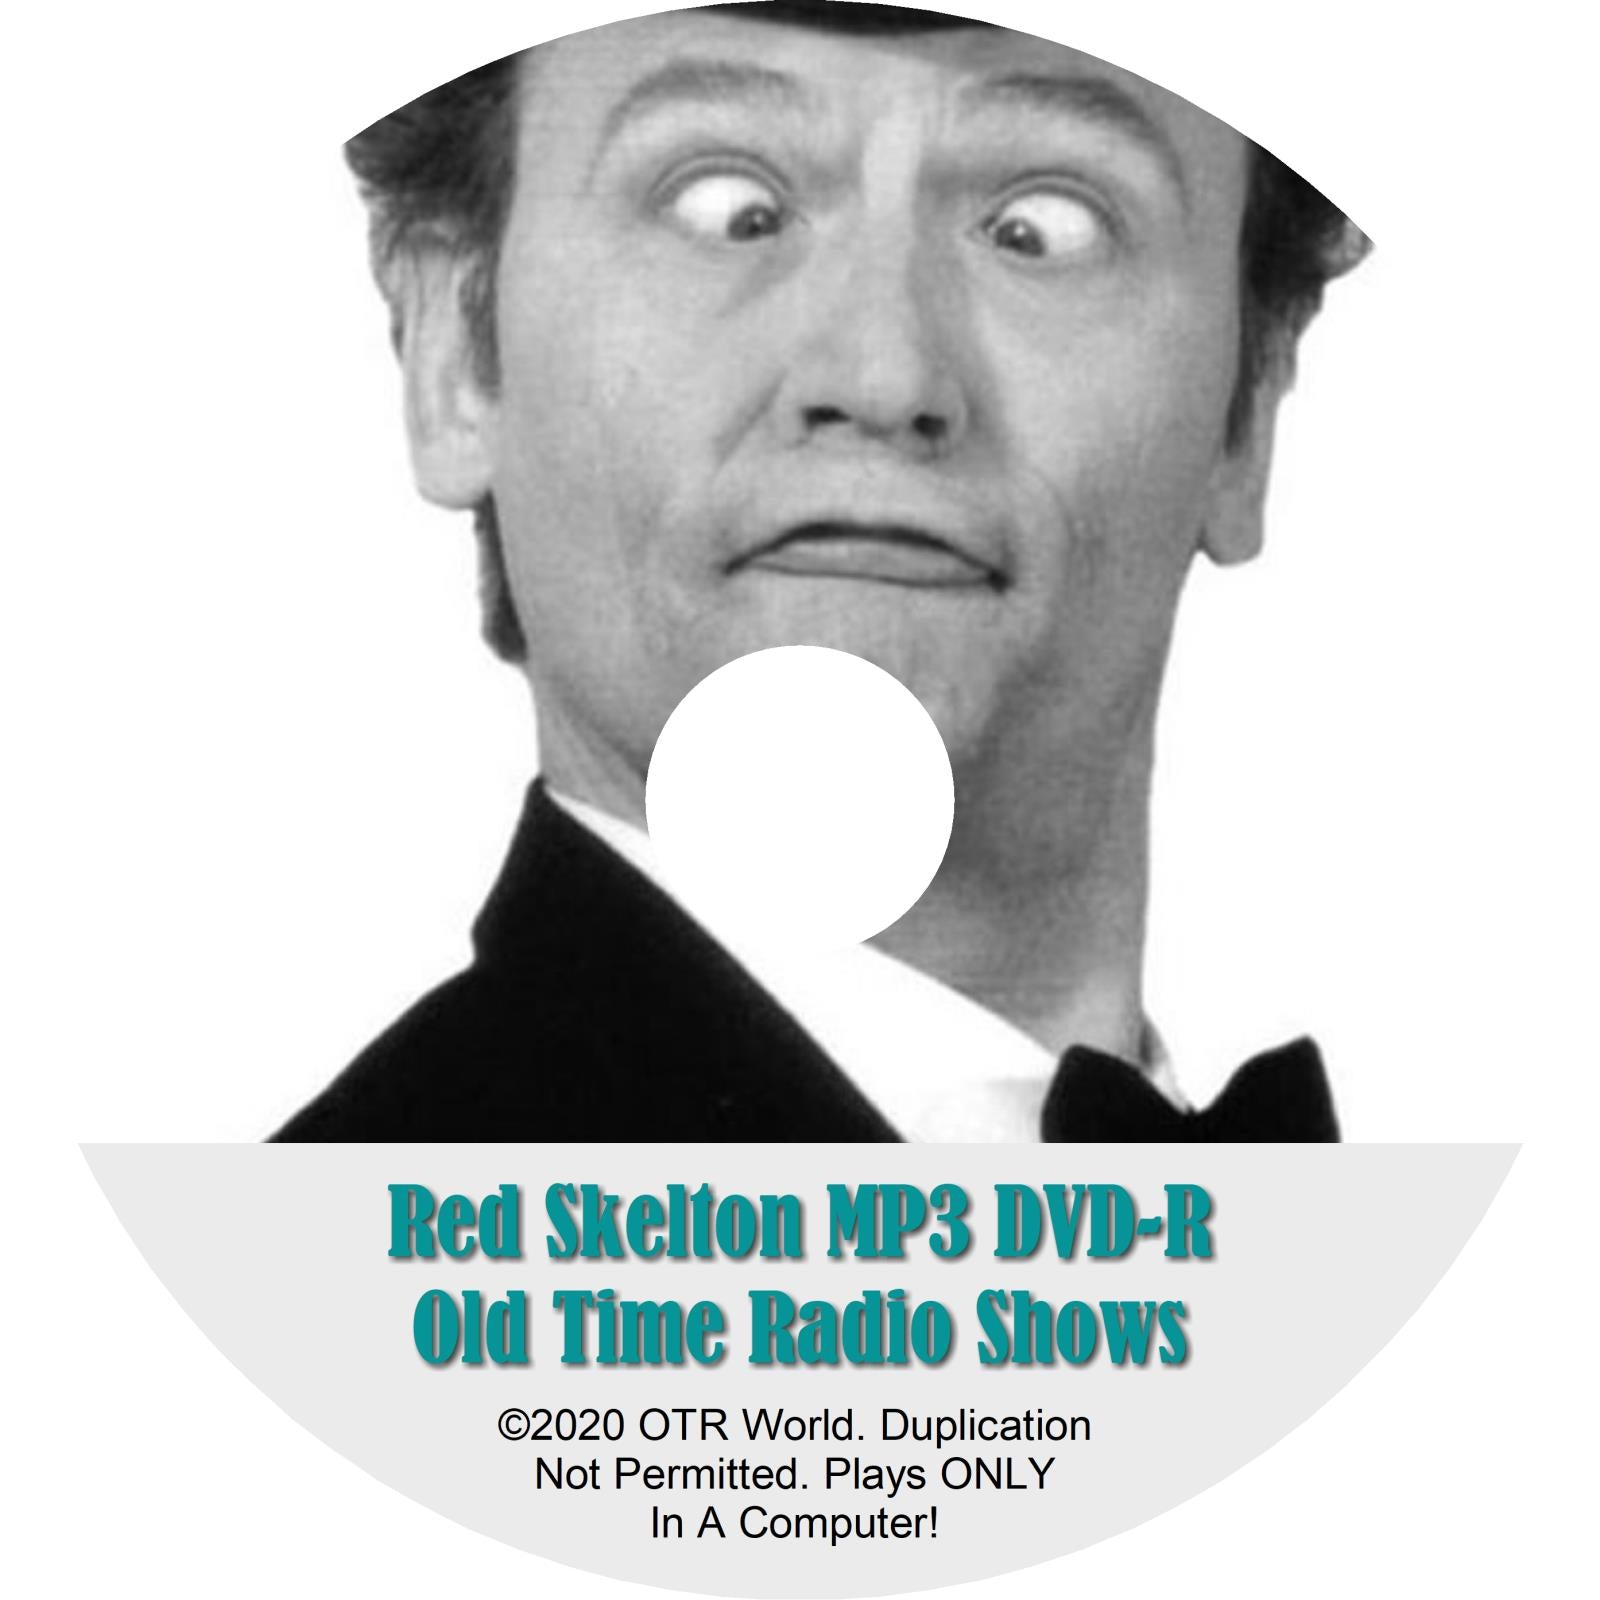 Red Skelton Show OTR OTRS Old Time Radio Shows MP3 On DVD-R 291 Episodes